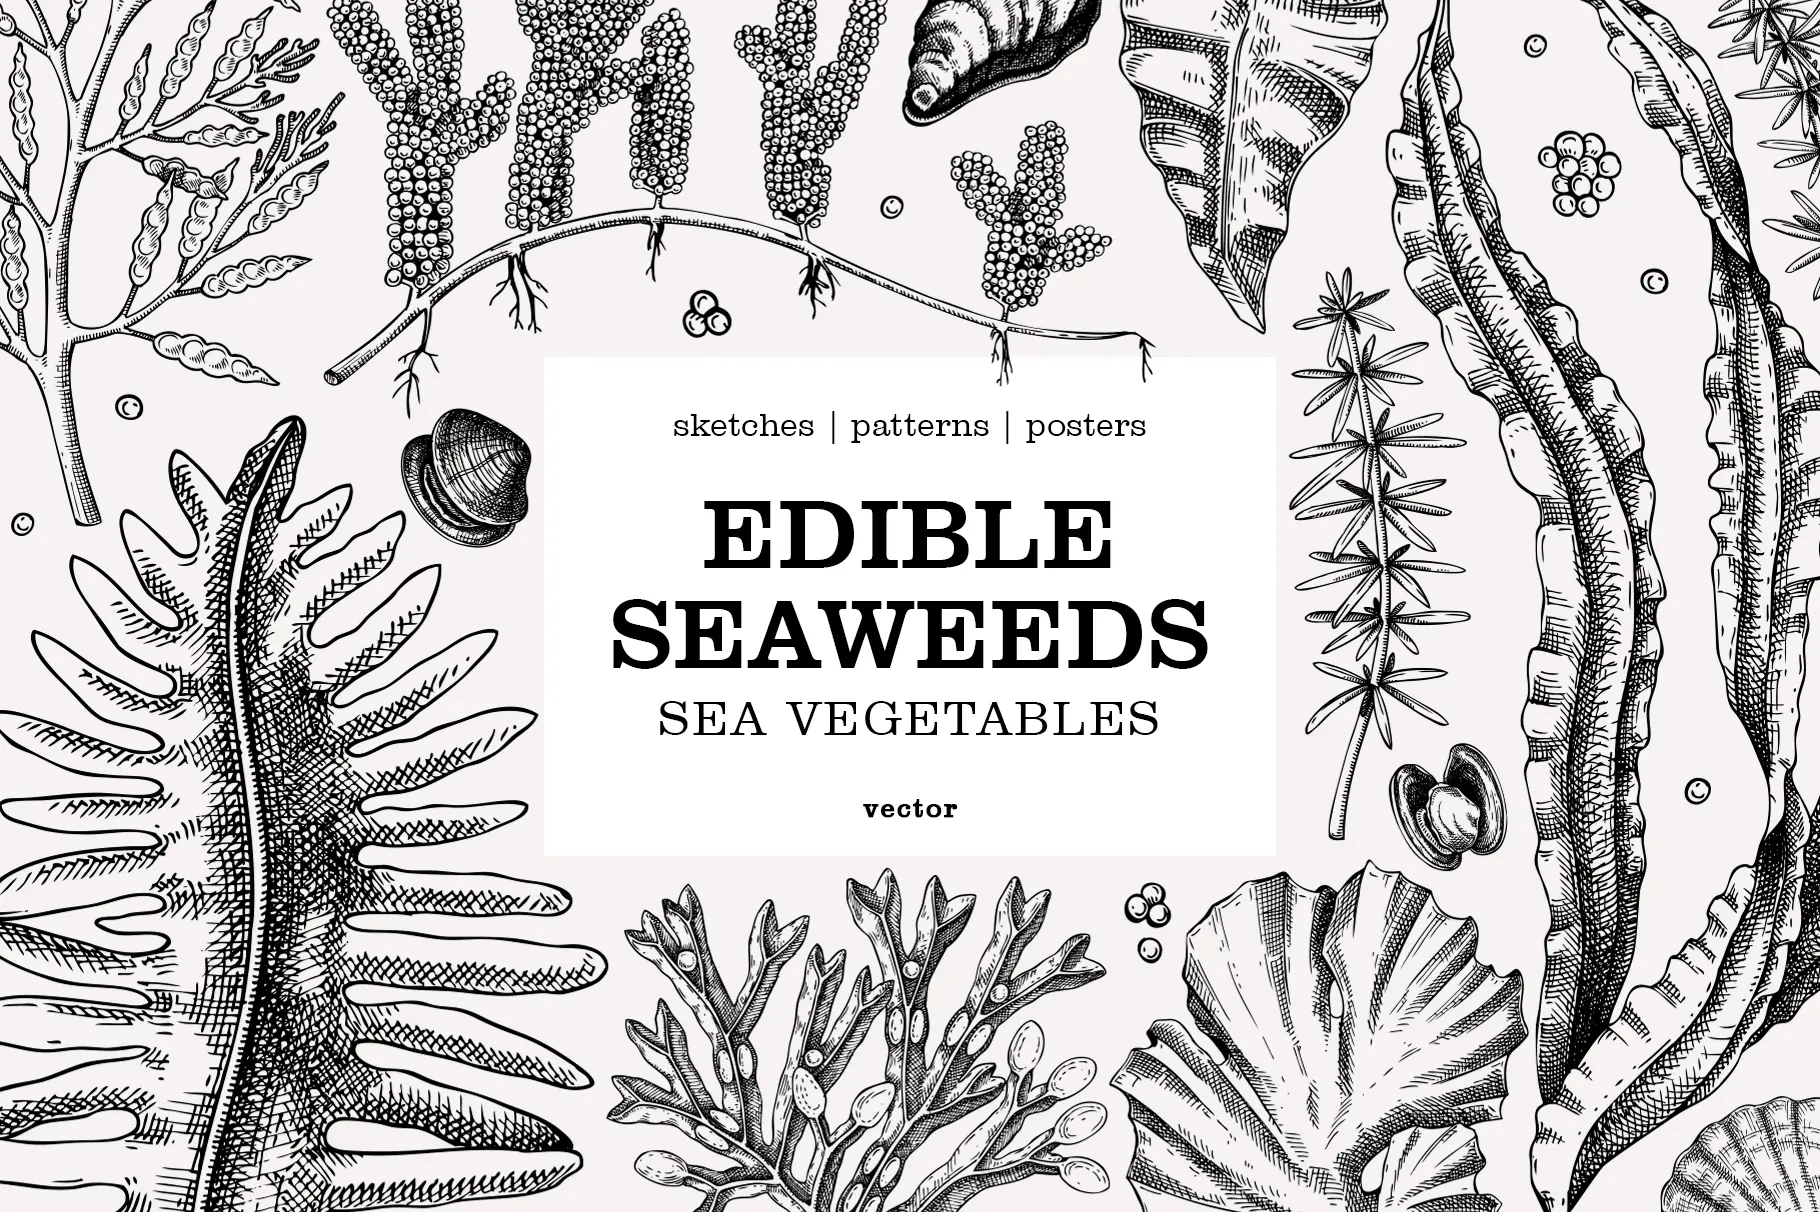 Edible Seaweed Sketches. Sea Vegetables Hand-drawn Vector Illustrations & Designs. Illustration